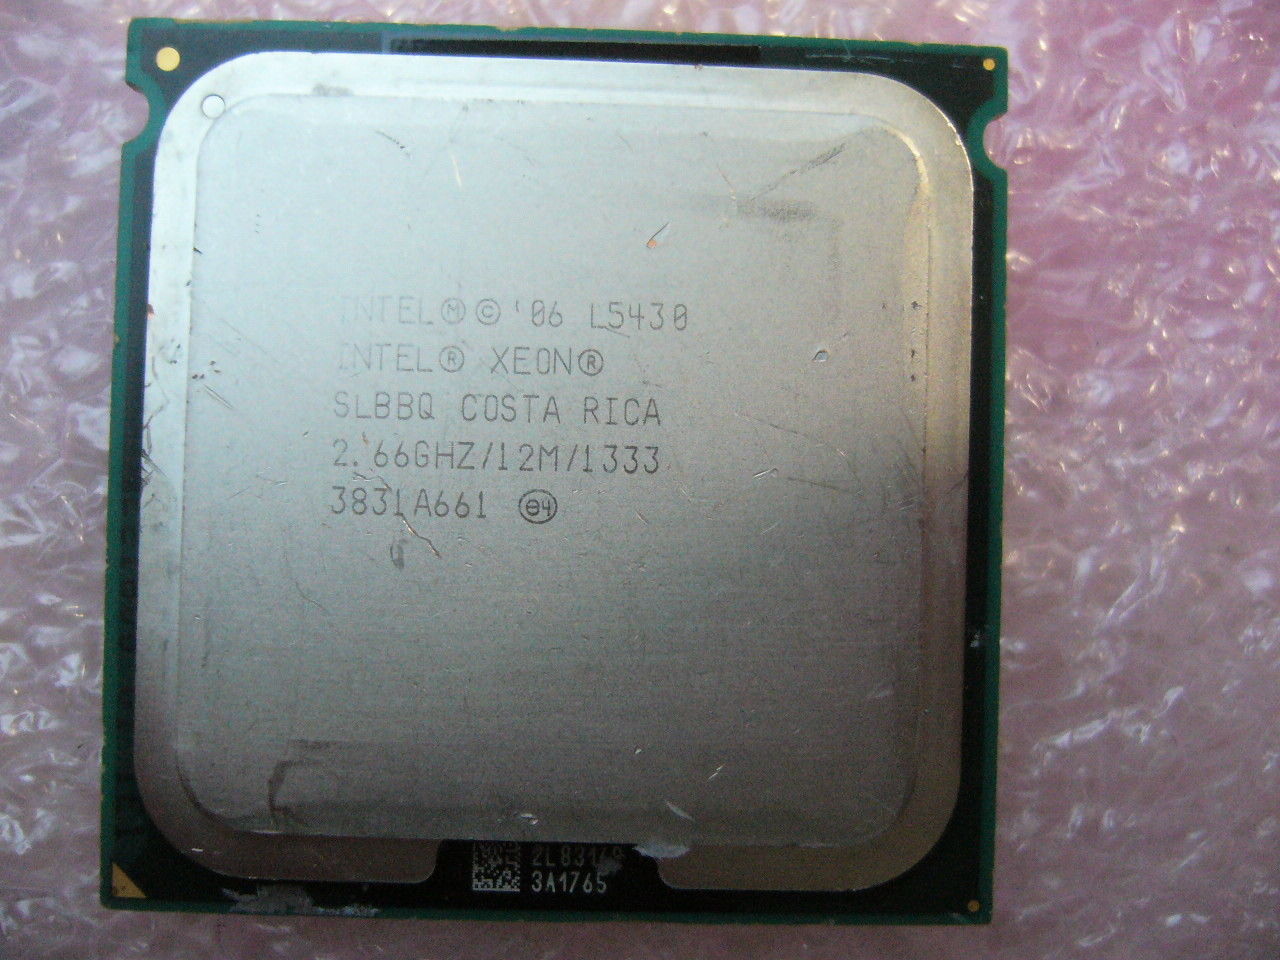 QTY 1x Intel Xeon CPU Quad Core L5430 2.66Ghz/12MB/1333Mhz LGA771 SLBBQ 50W - Click Image to Close